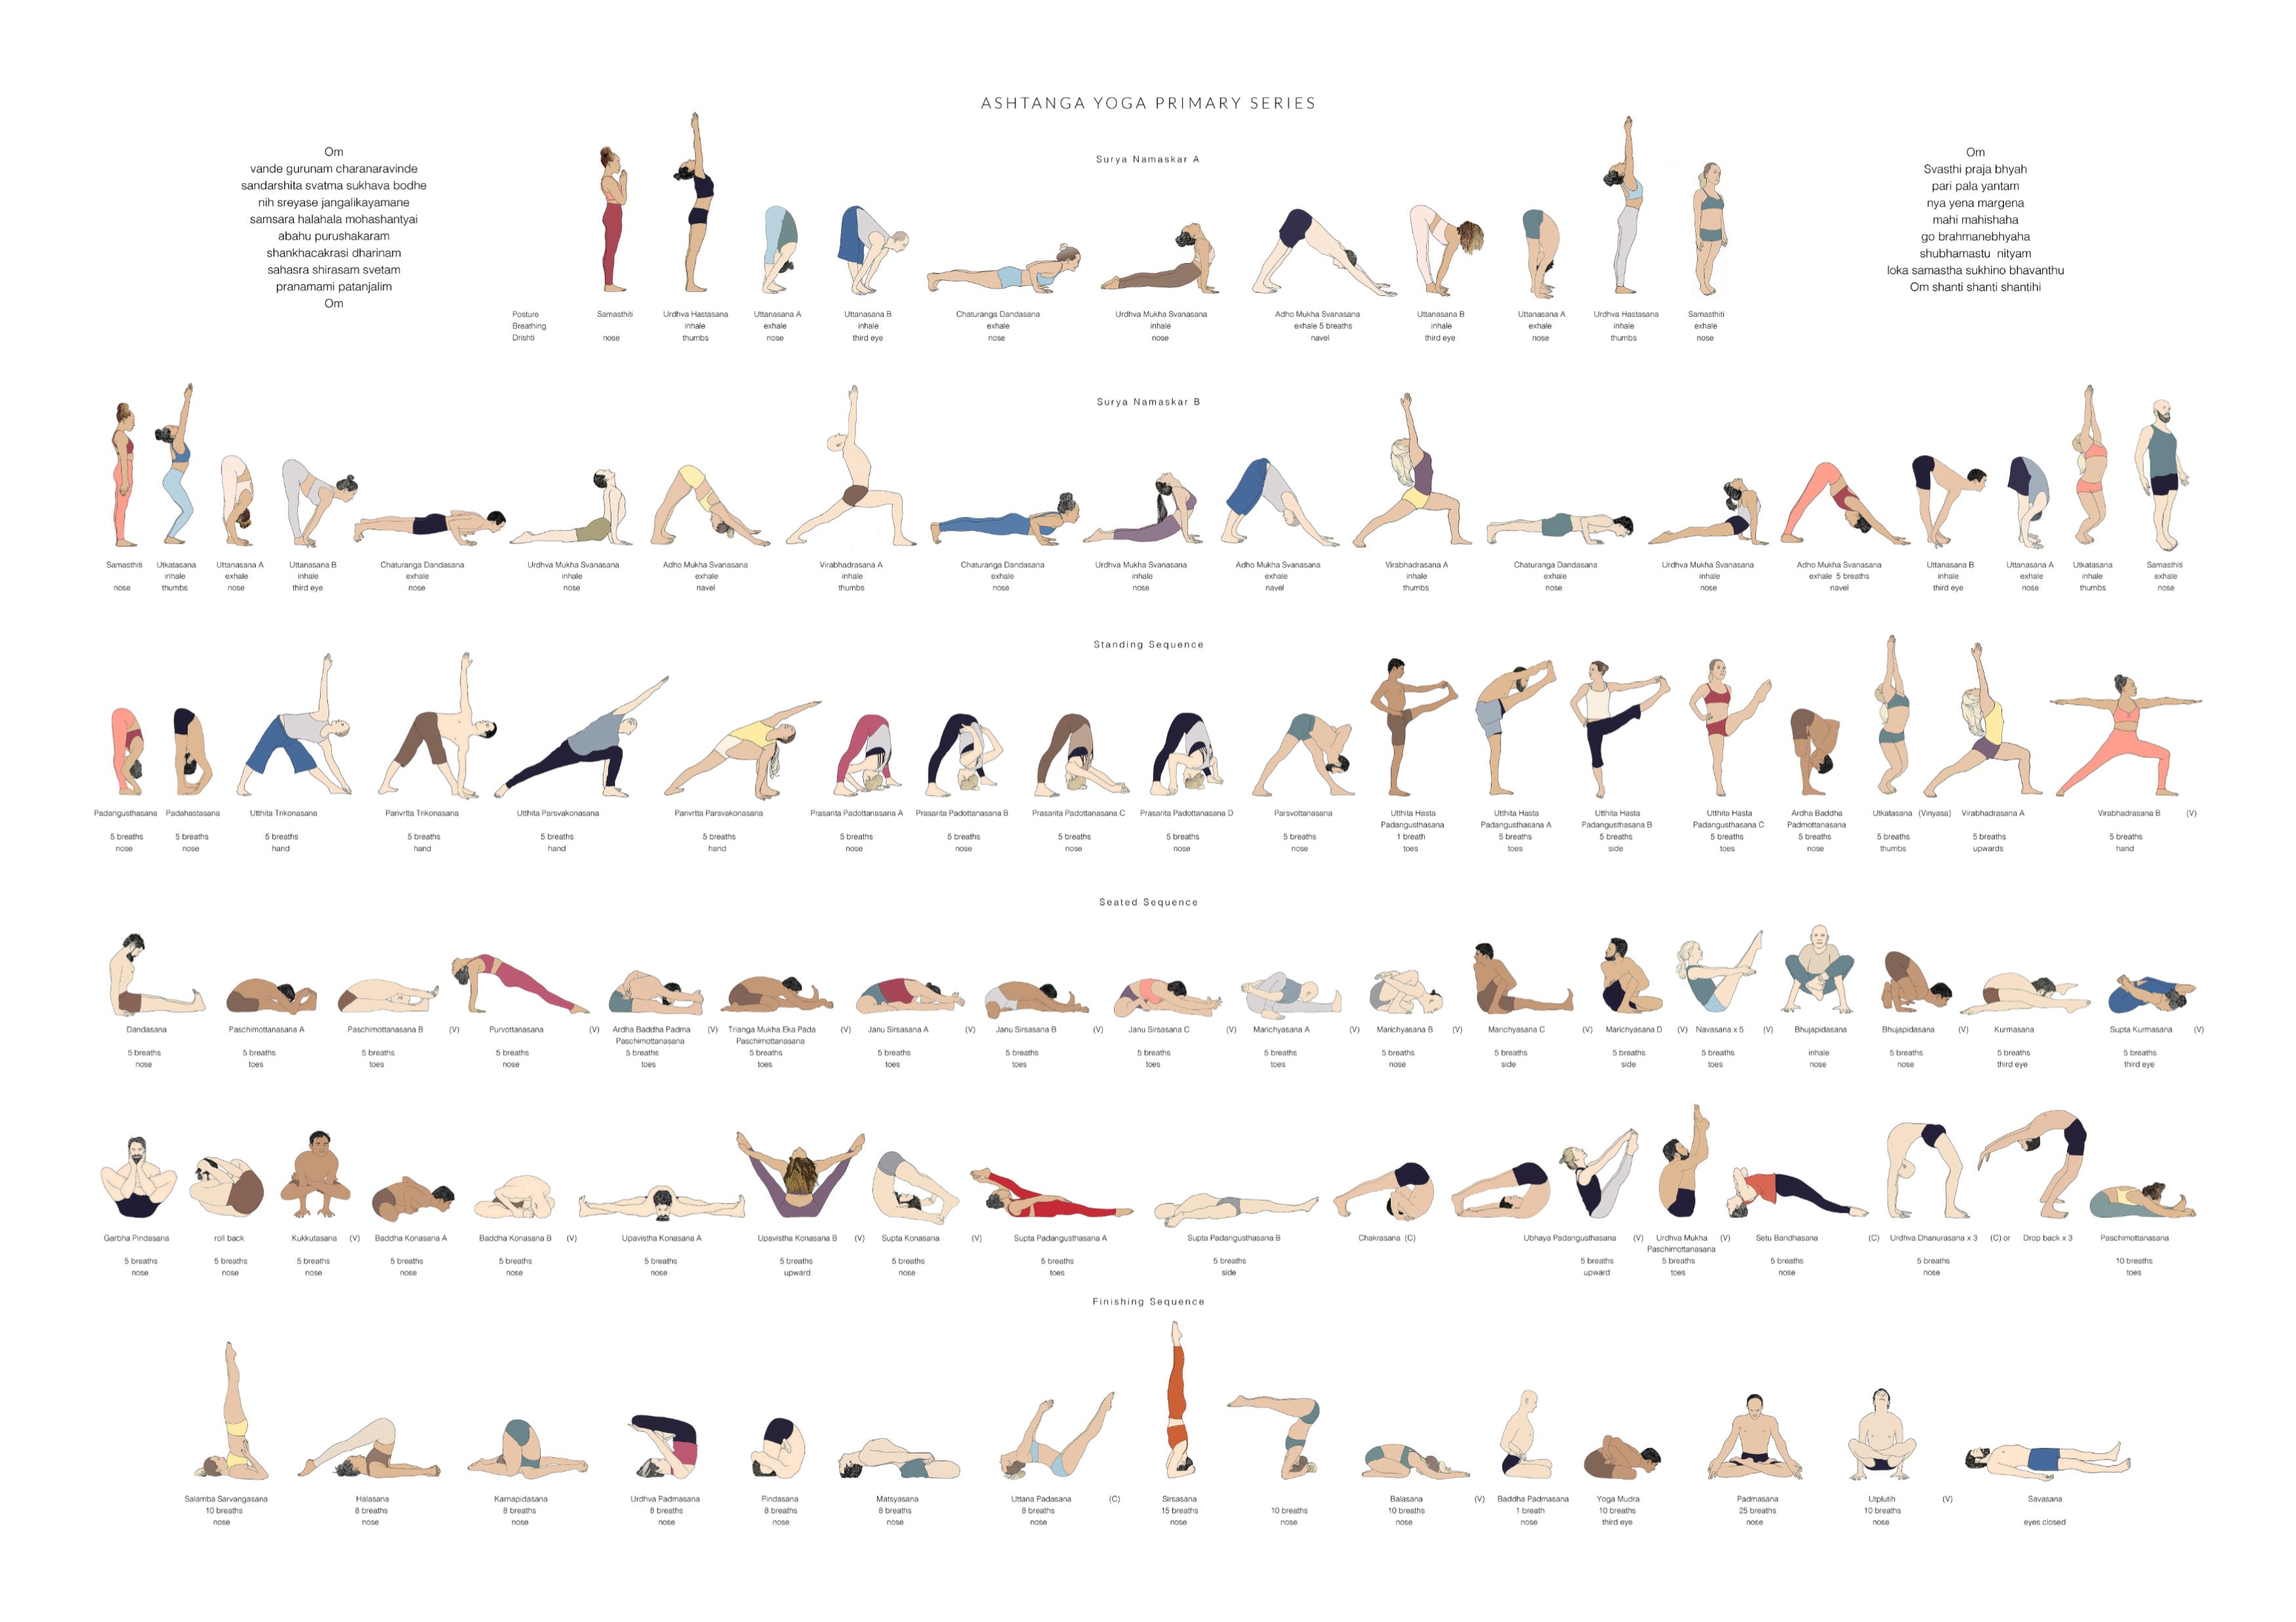 Contortion Poses - Flexibility the Ashtanga Yoga Way